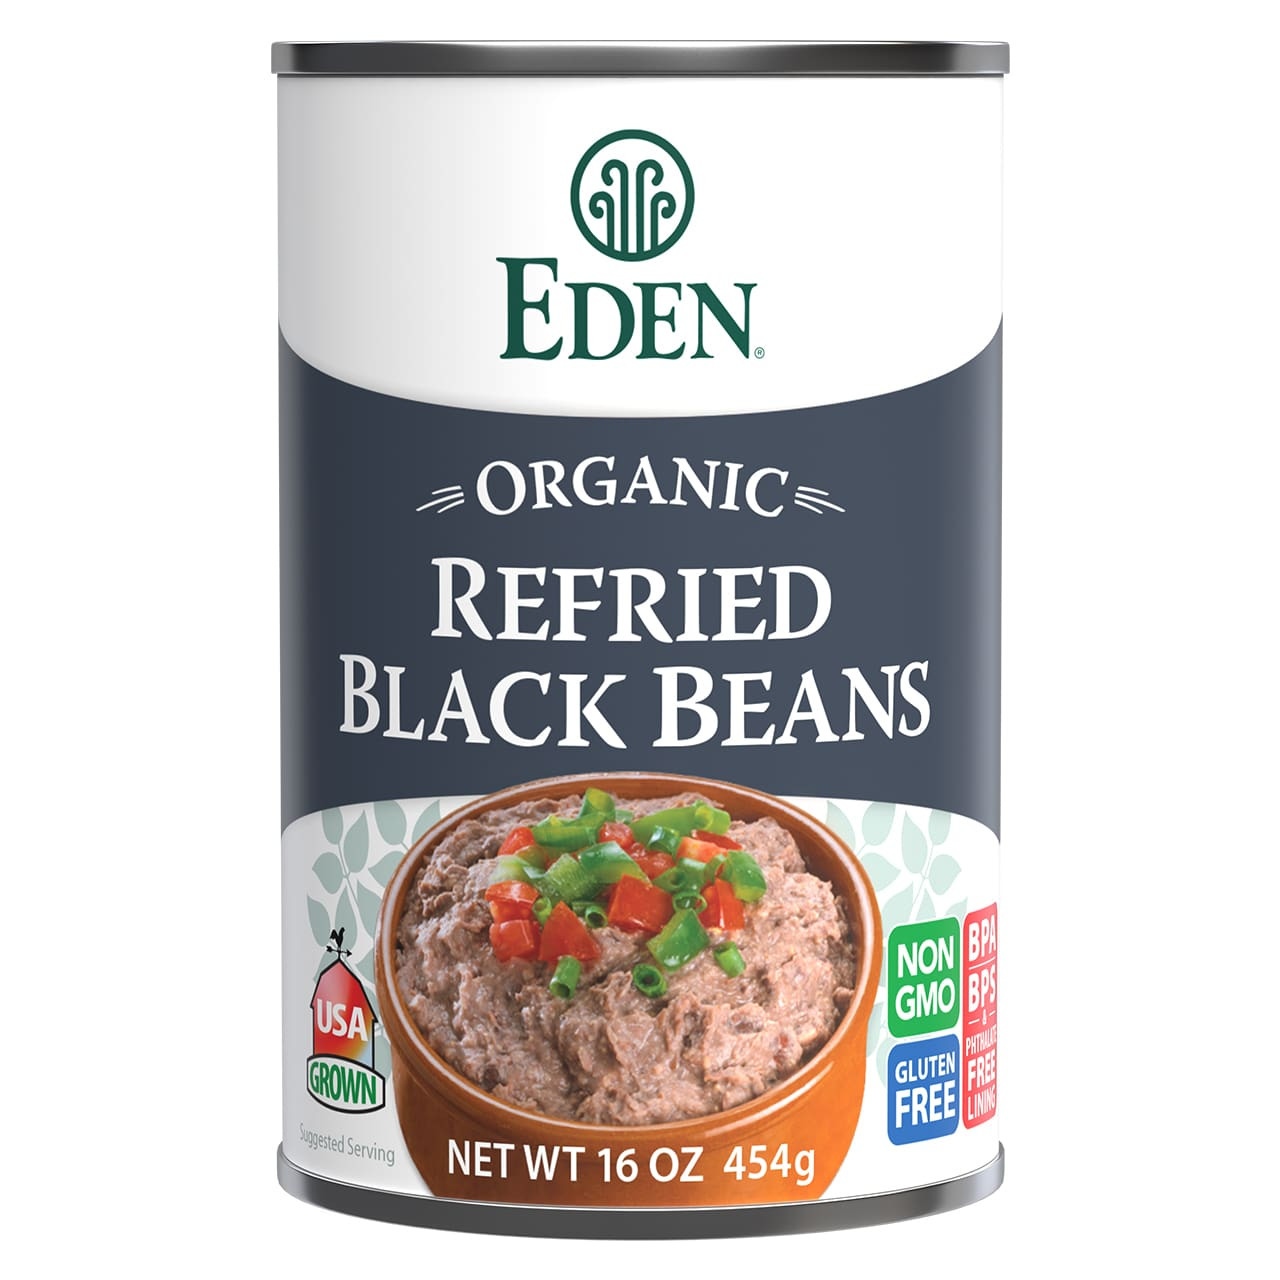 Refried Black Beans, organic